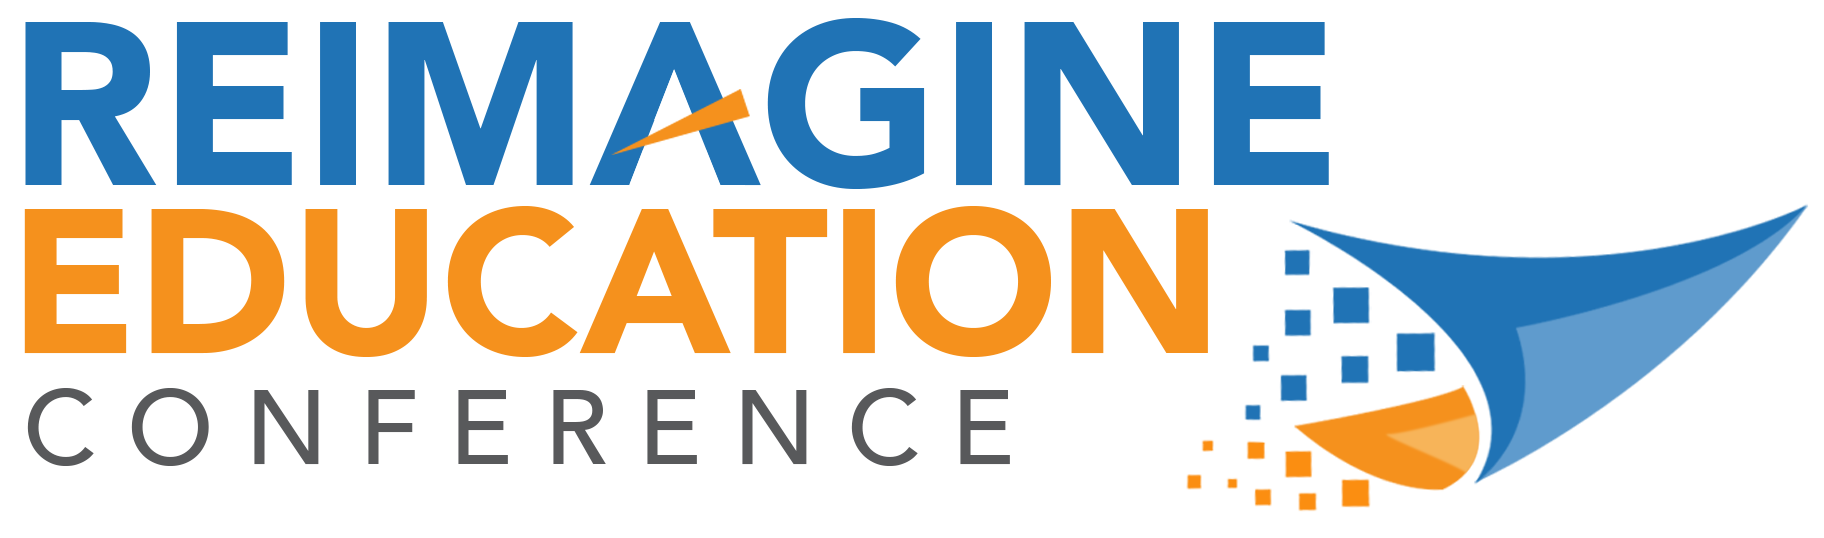 Reimagine Education Conference